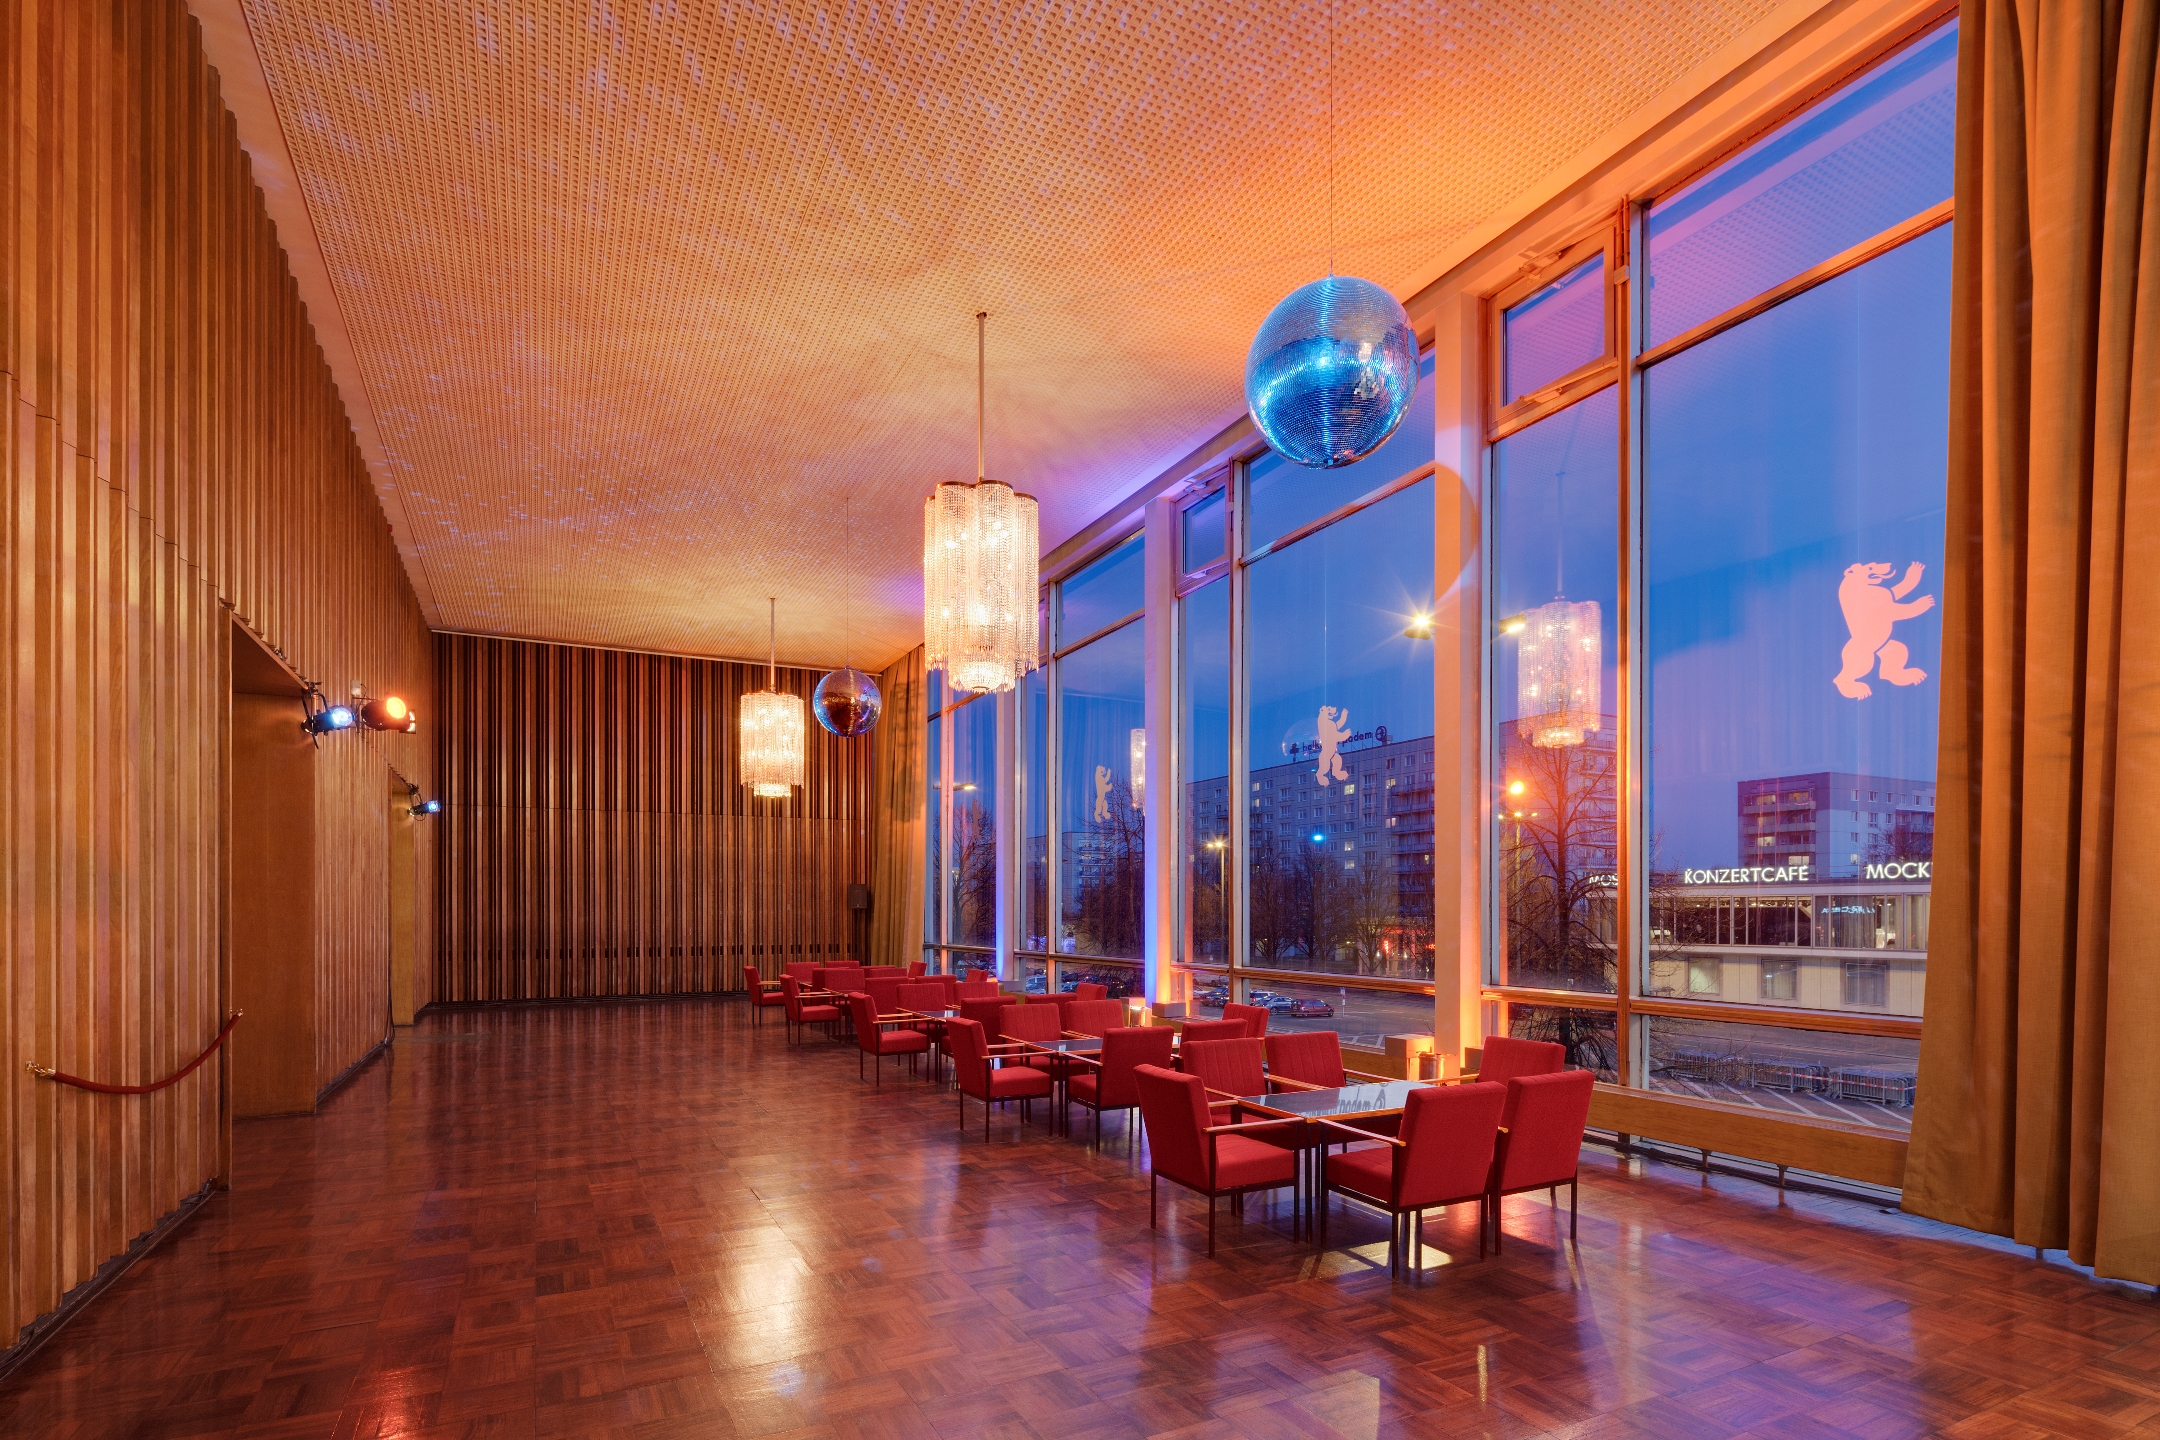 Panorama Bar in der Abenddämmerung. Foto: Yorck Kinogruppe/ Daniel Horn